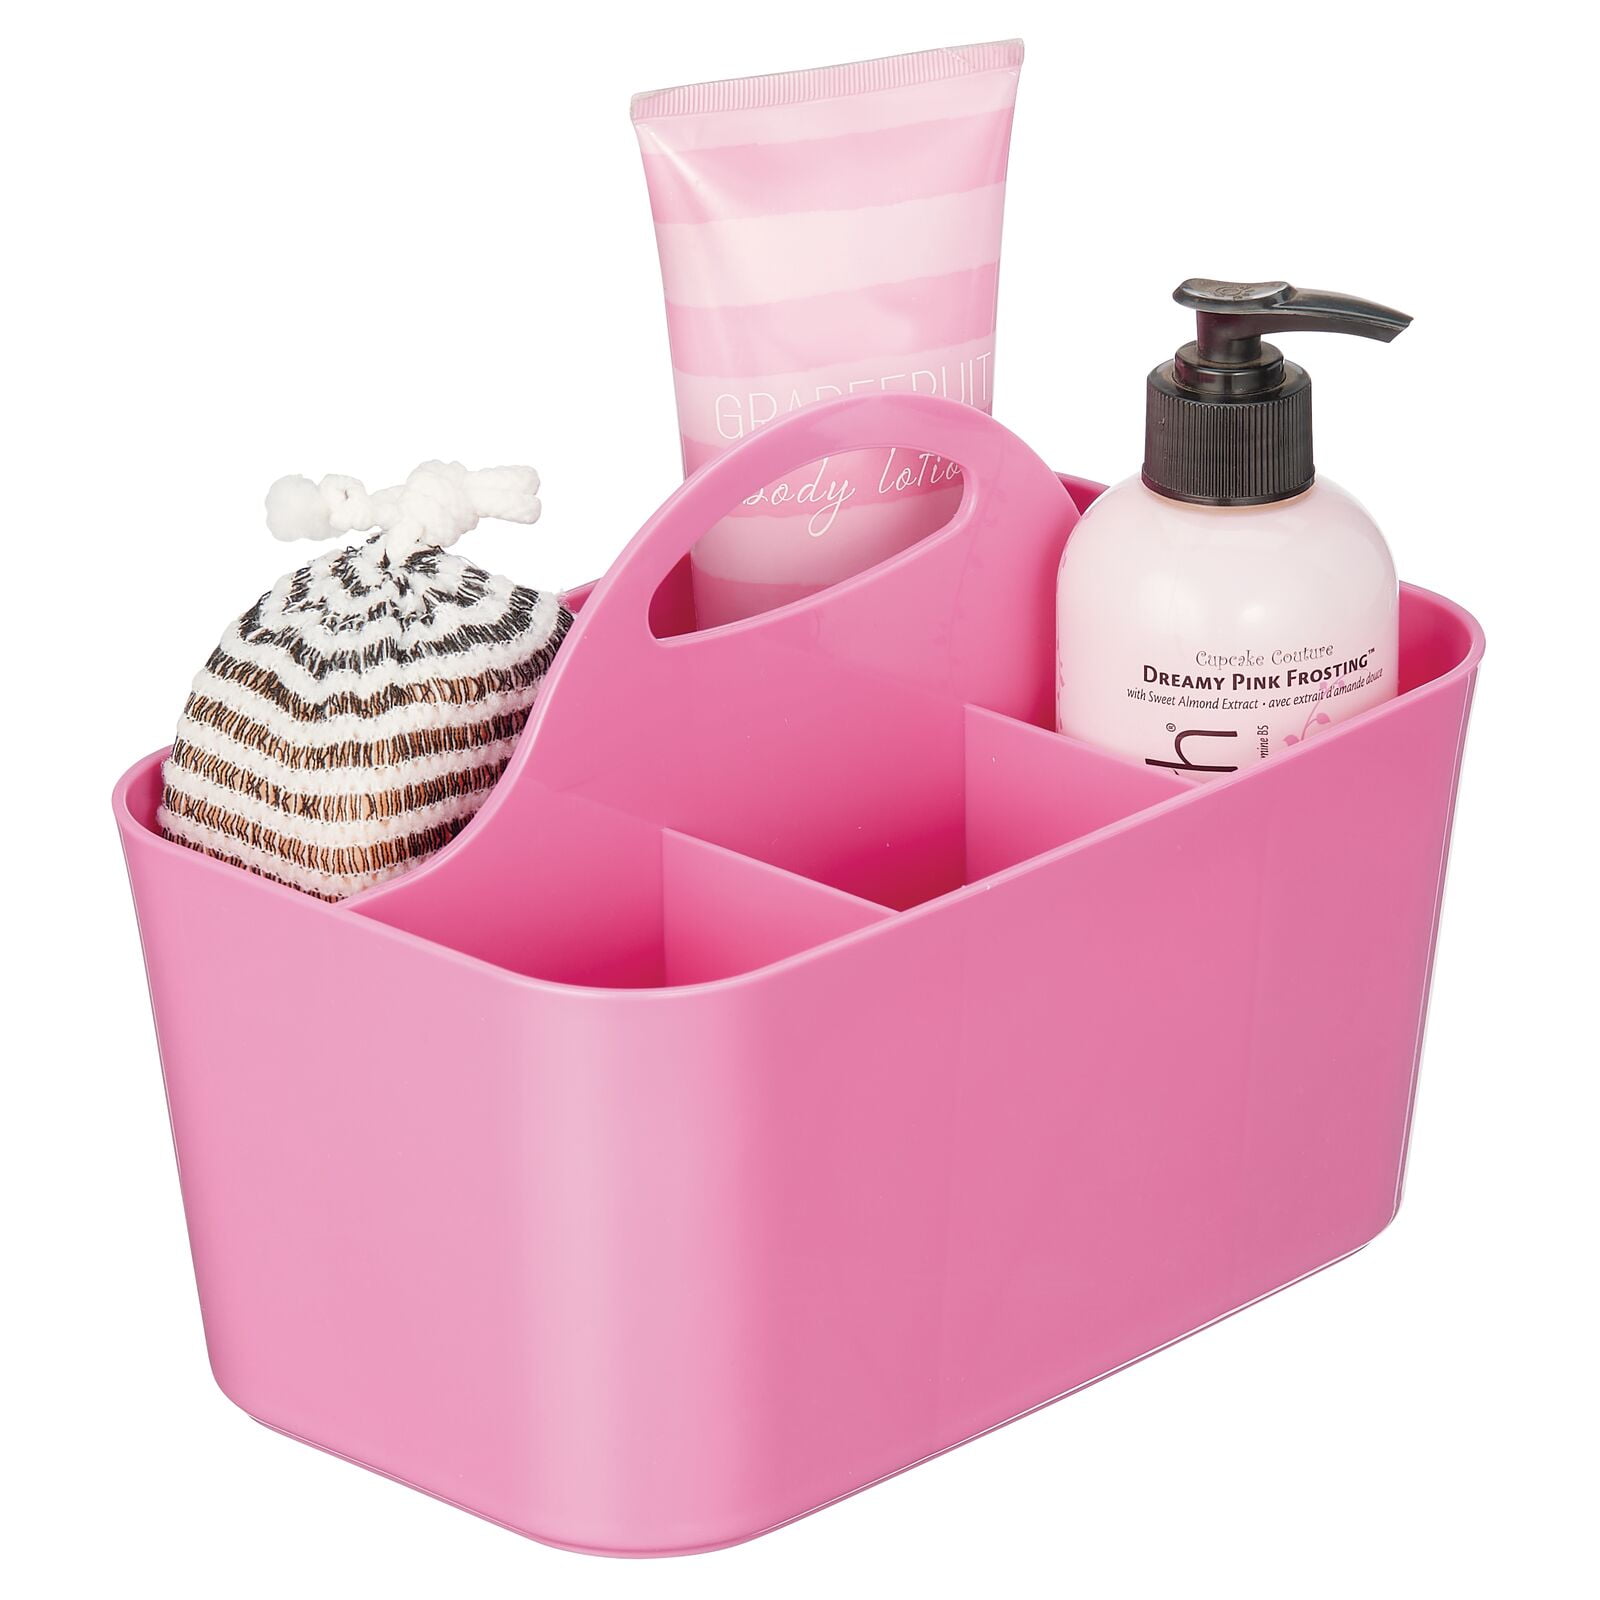 Moforoco Shower Caddy Shelf Organizer Rack, Self Adhesive Pink Bathroom  Accessories Shelves Basket, Home Farmhouse Wall Shower Inside Organization  and